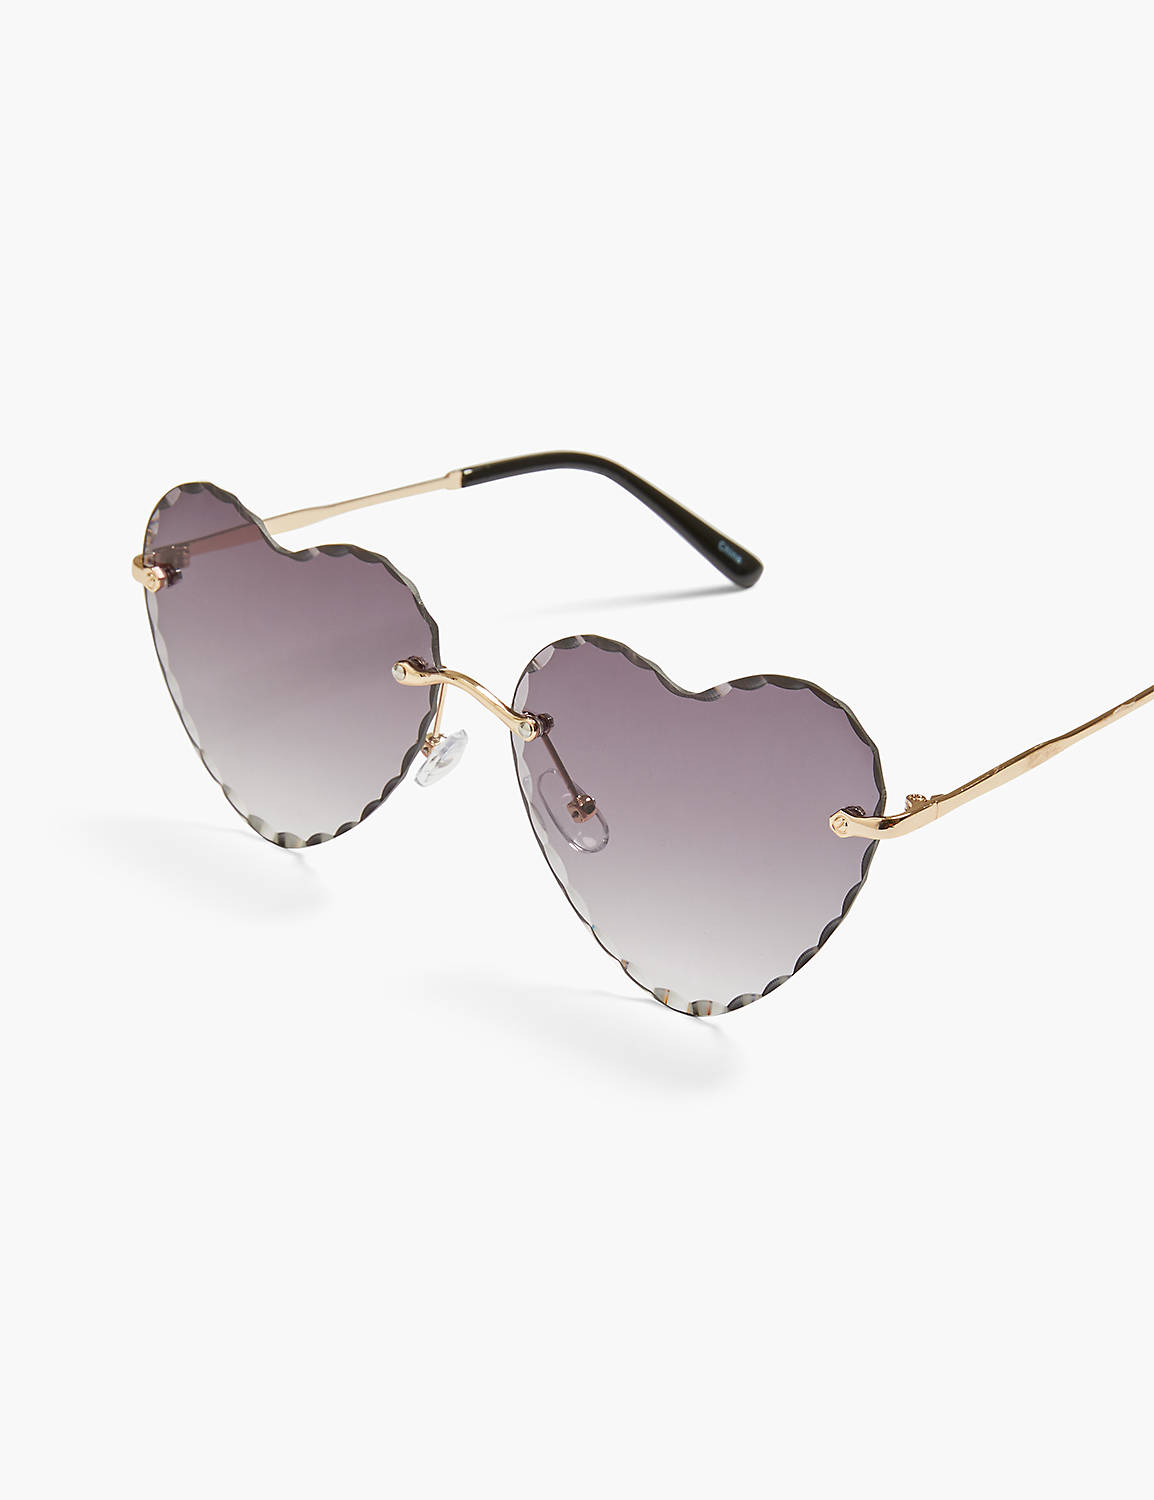 Heart Rimless Sunglasses Product Image 1